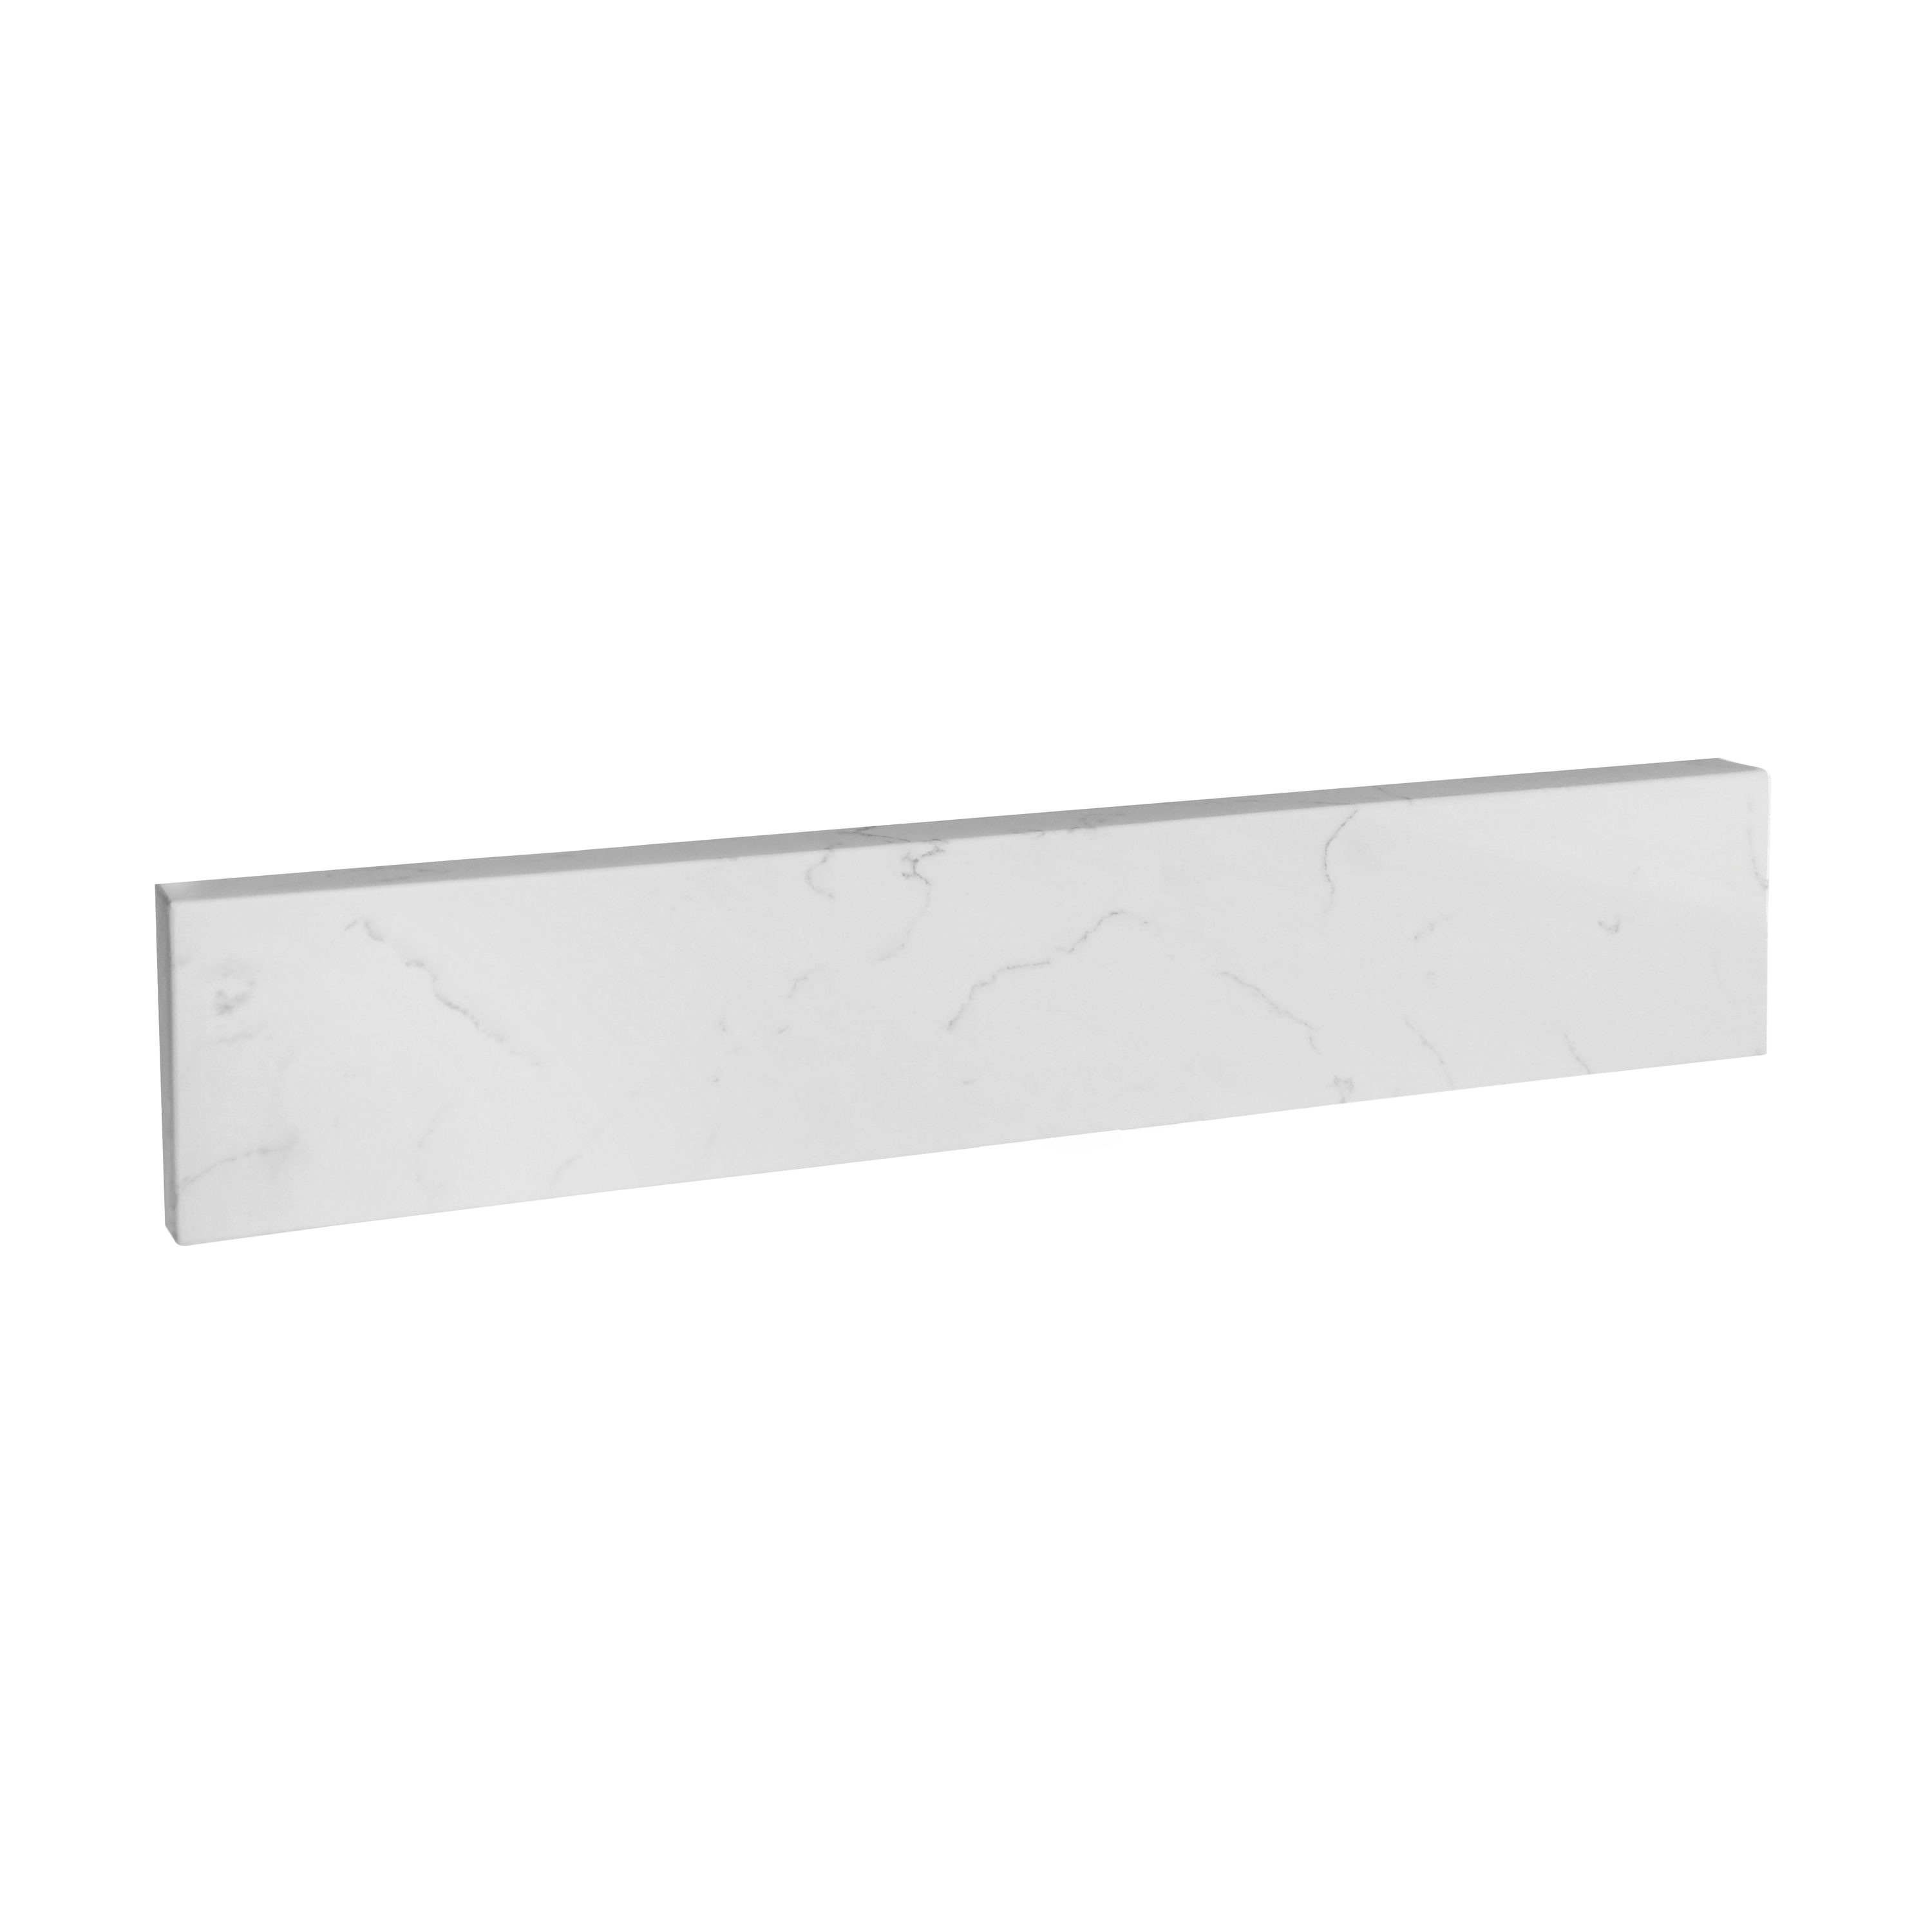 Bestview 4-in H x 21.25-in L Carrara White Quartz Bathroom Side Splash ...